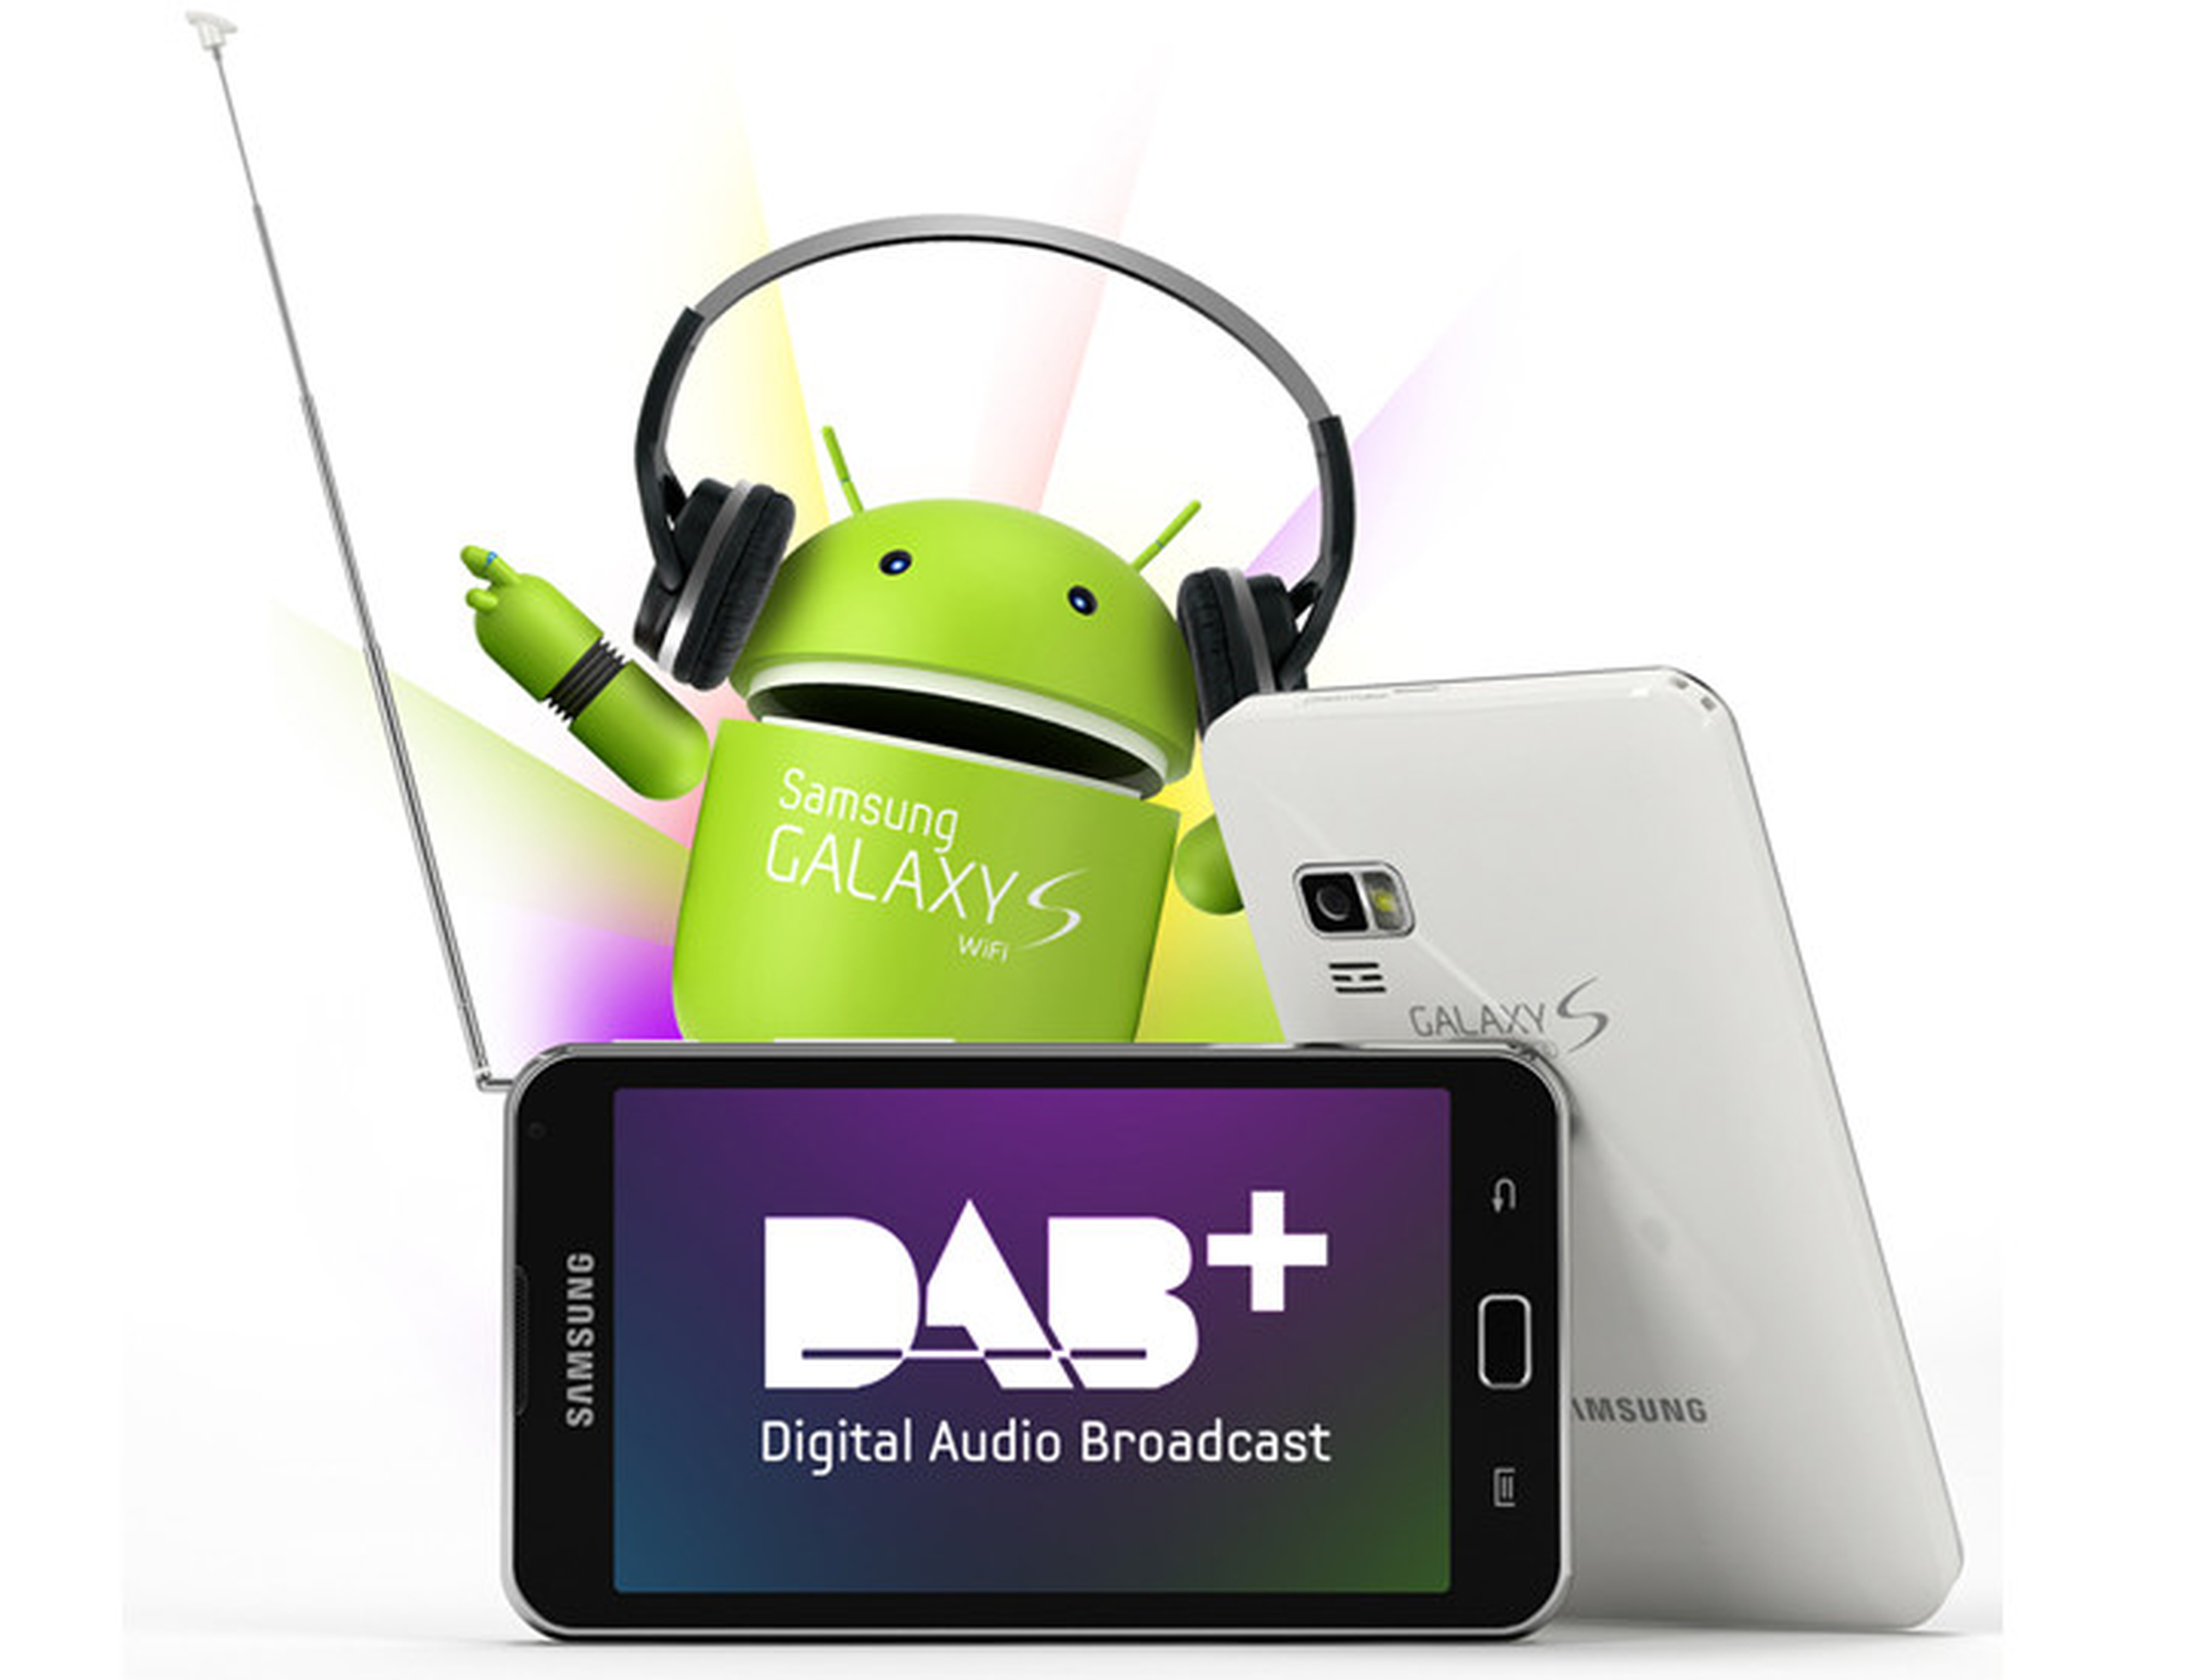 Galaxy S Wifi 5.0 DAB+